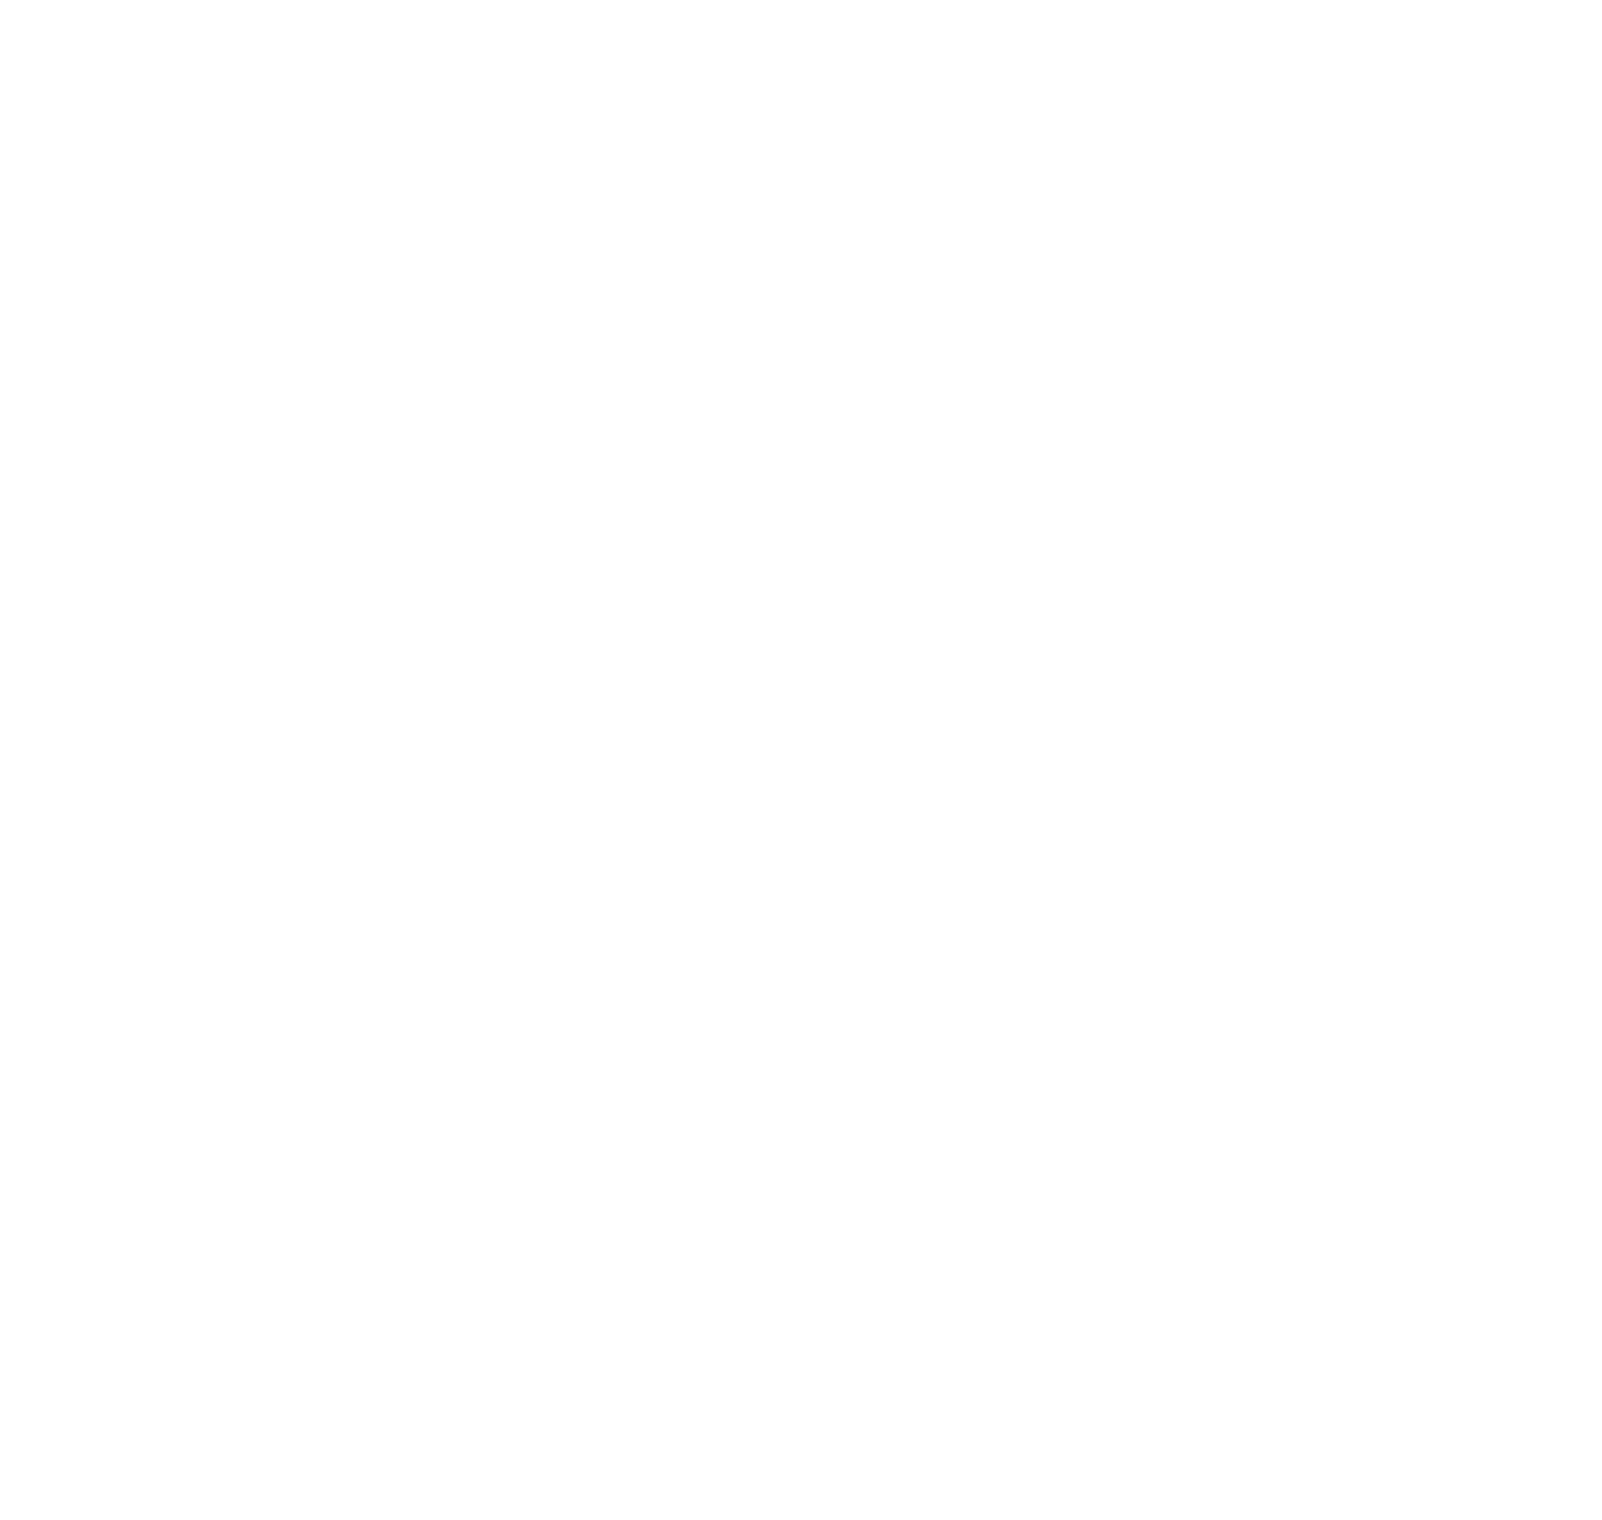 Print-On-Demand Dropshipping